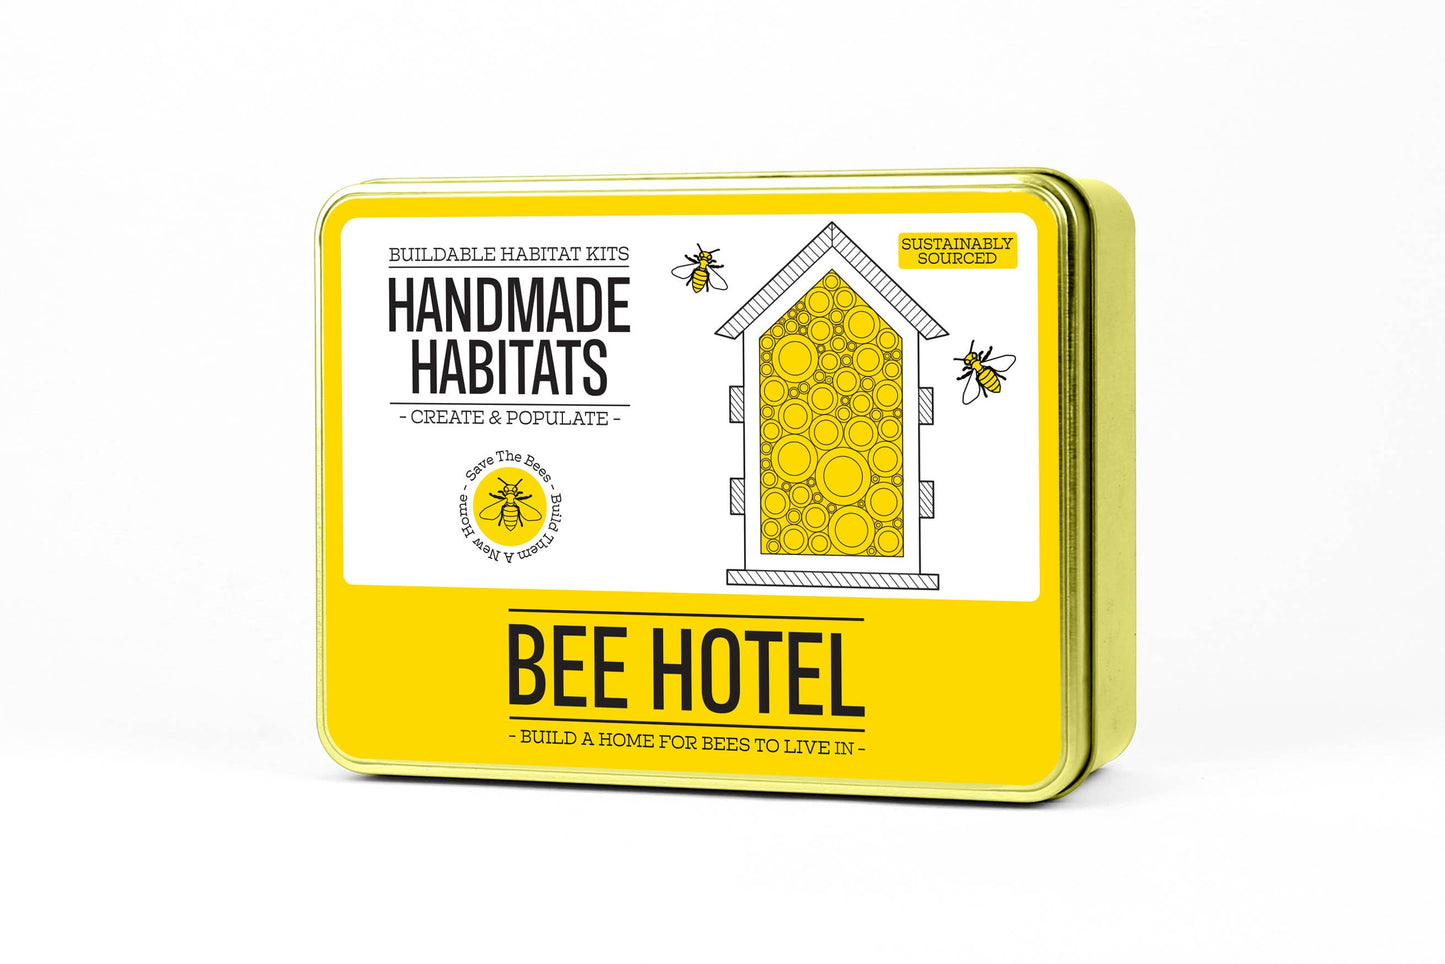 BEE HOTEL HANDMADE HABITATS